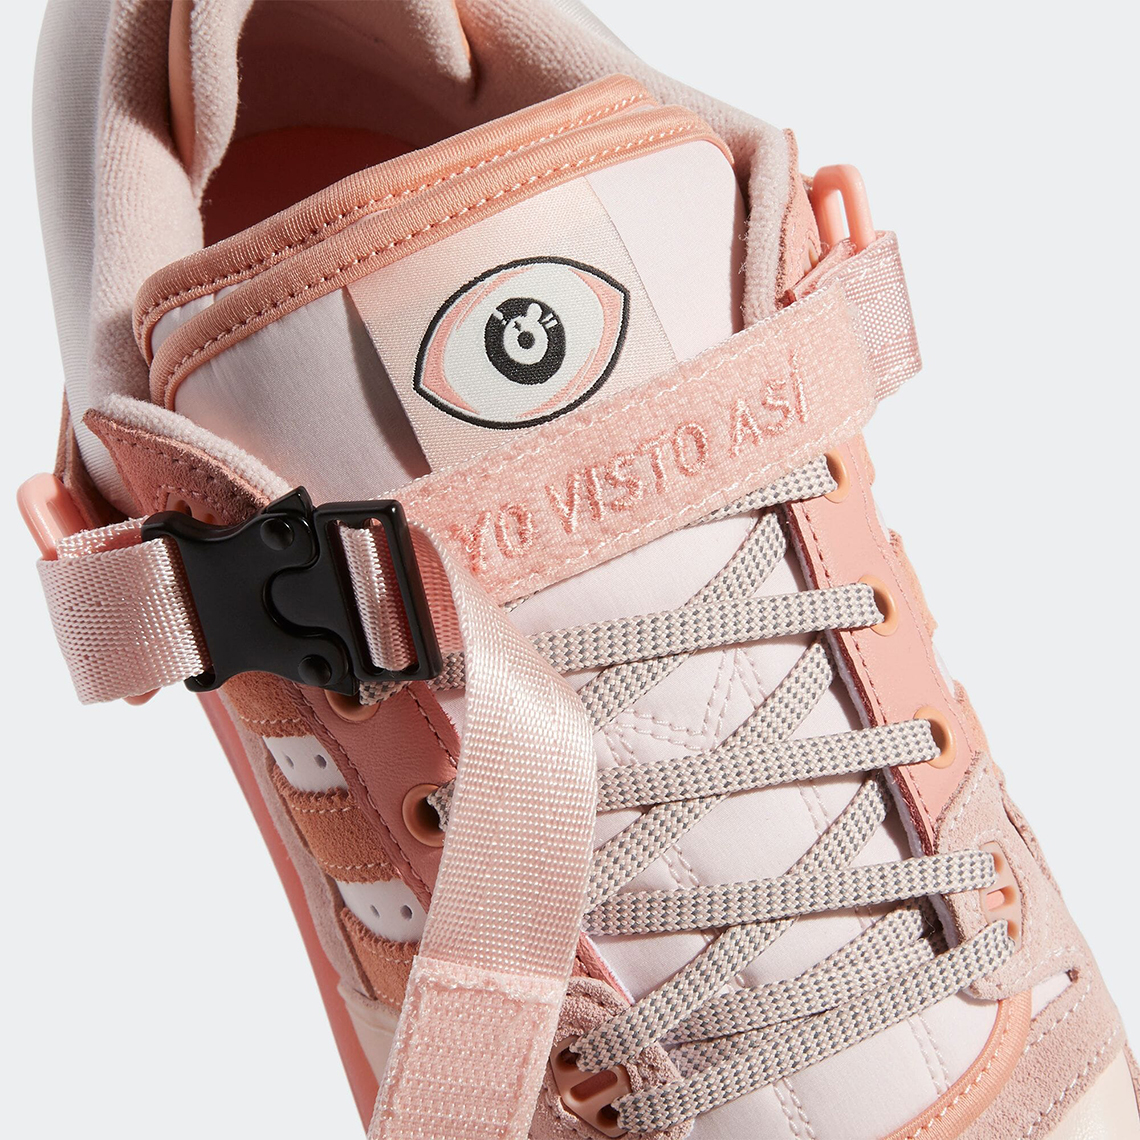 bad-bunny-adidas-forum-buckle-low-pink-gw0265-5.jpg